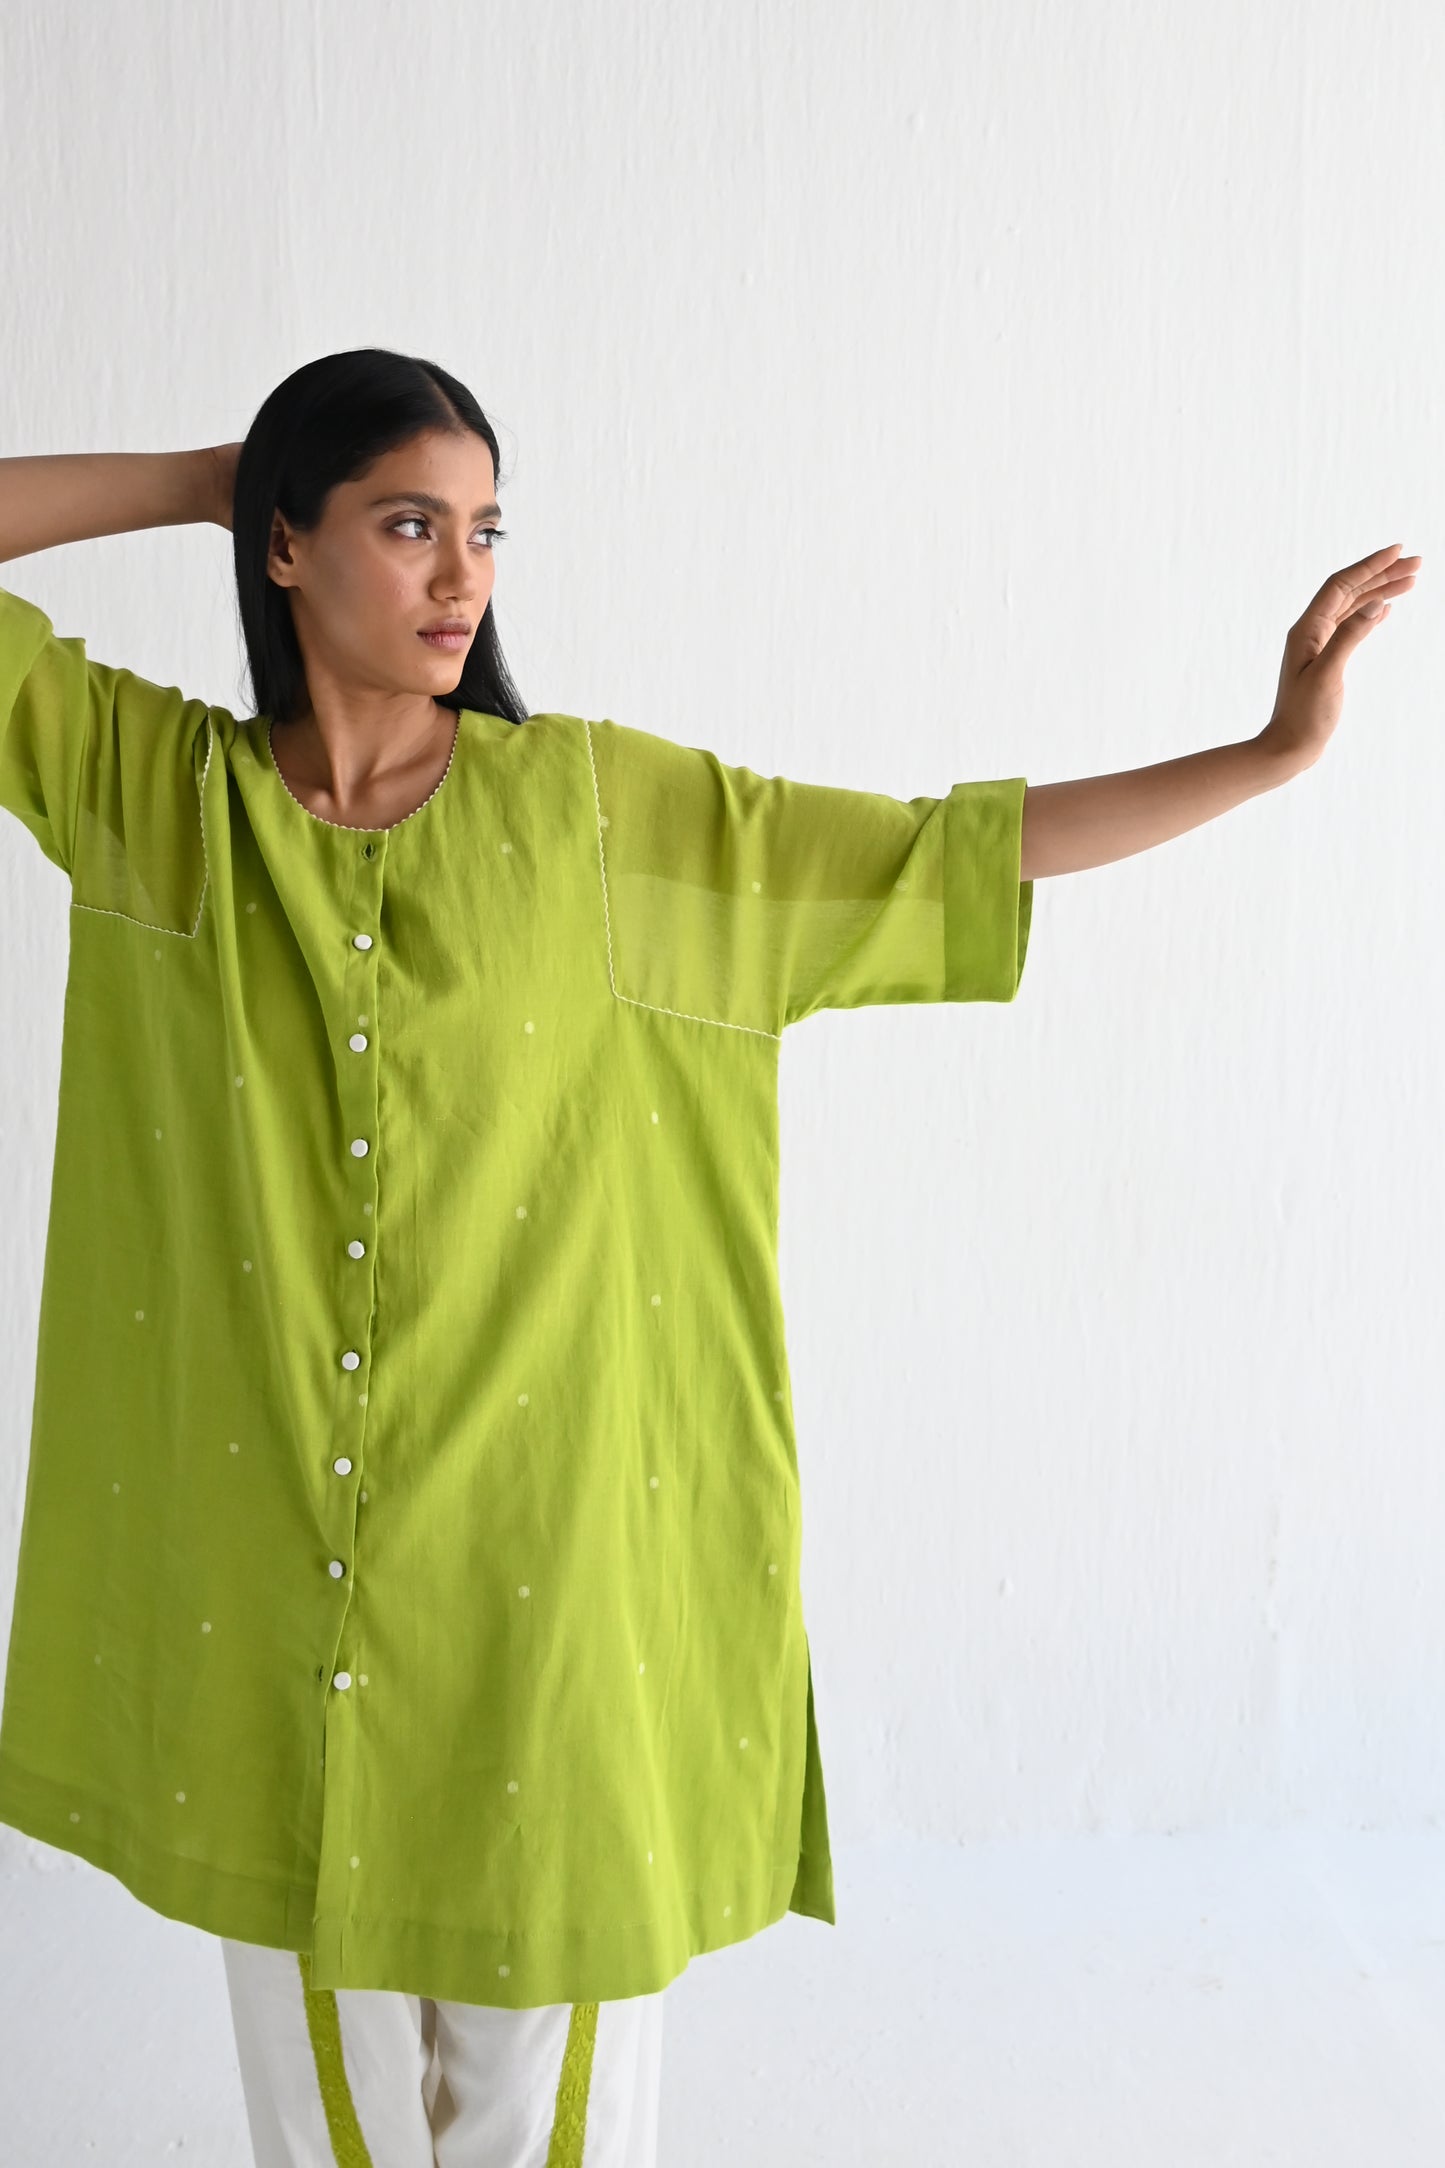 Choga Shirt in Lime Green Jamdani with Salwar